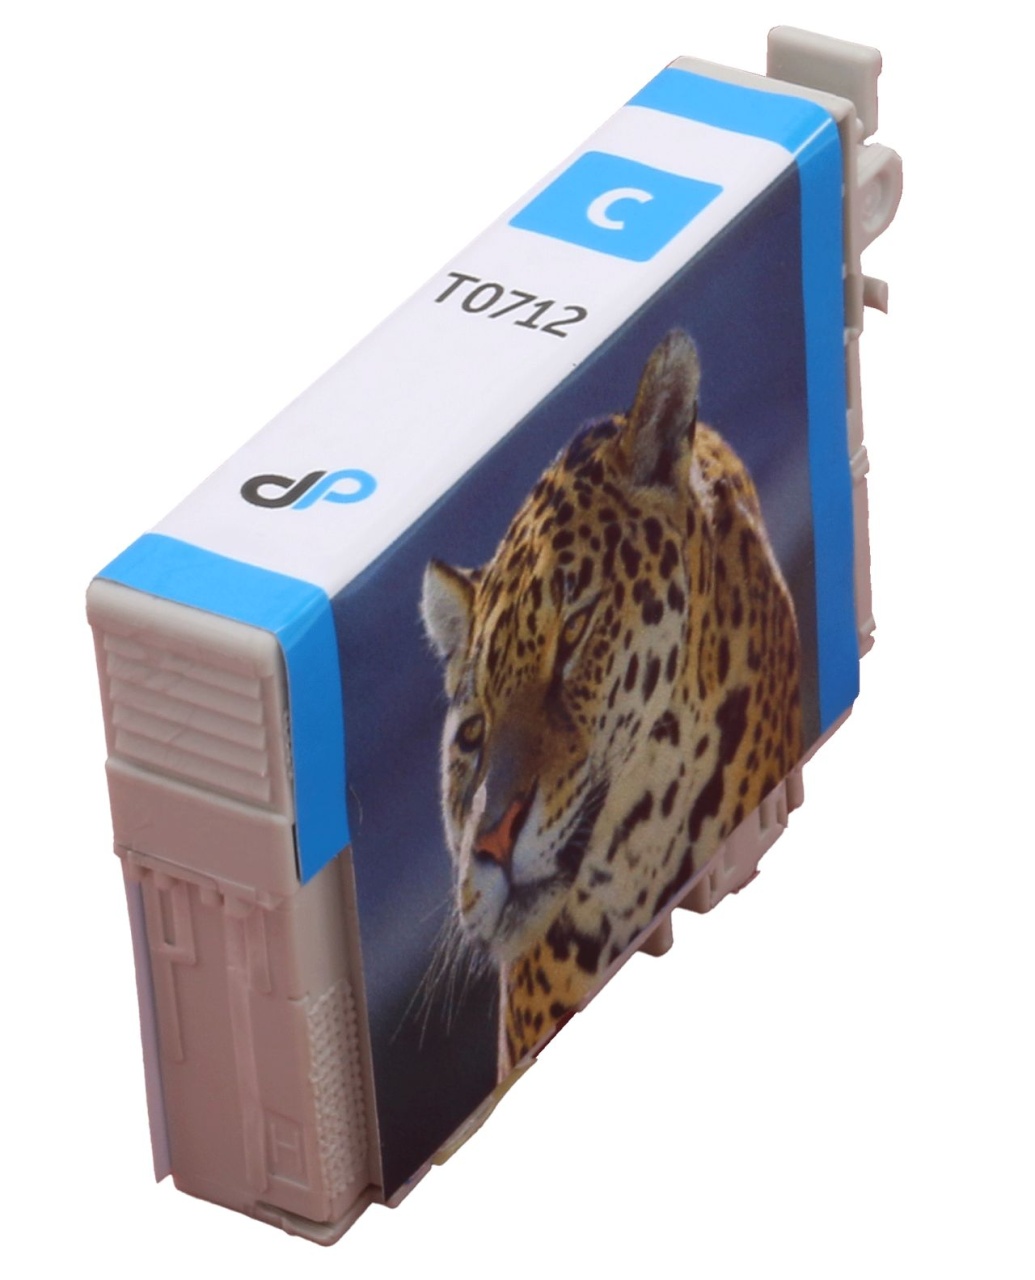 Kompatibel zu Epson T0712 - Tinte cyan Gepard DruckerProfi ml 5,5 Der 